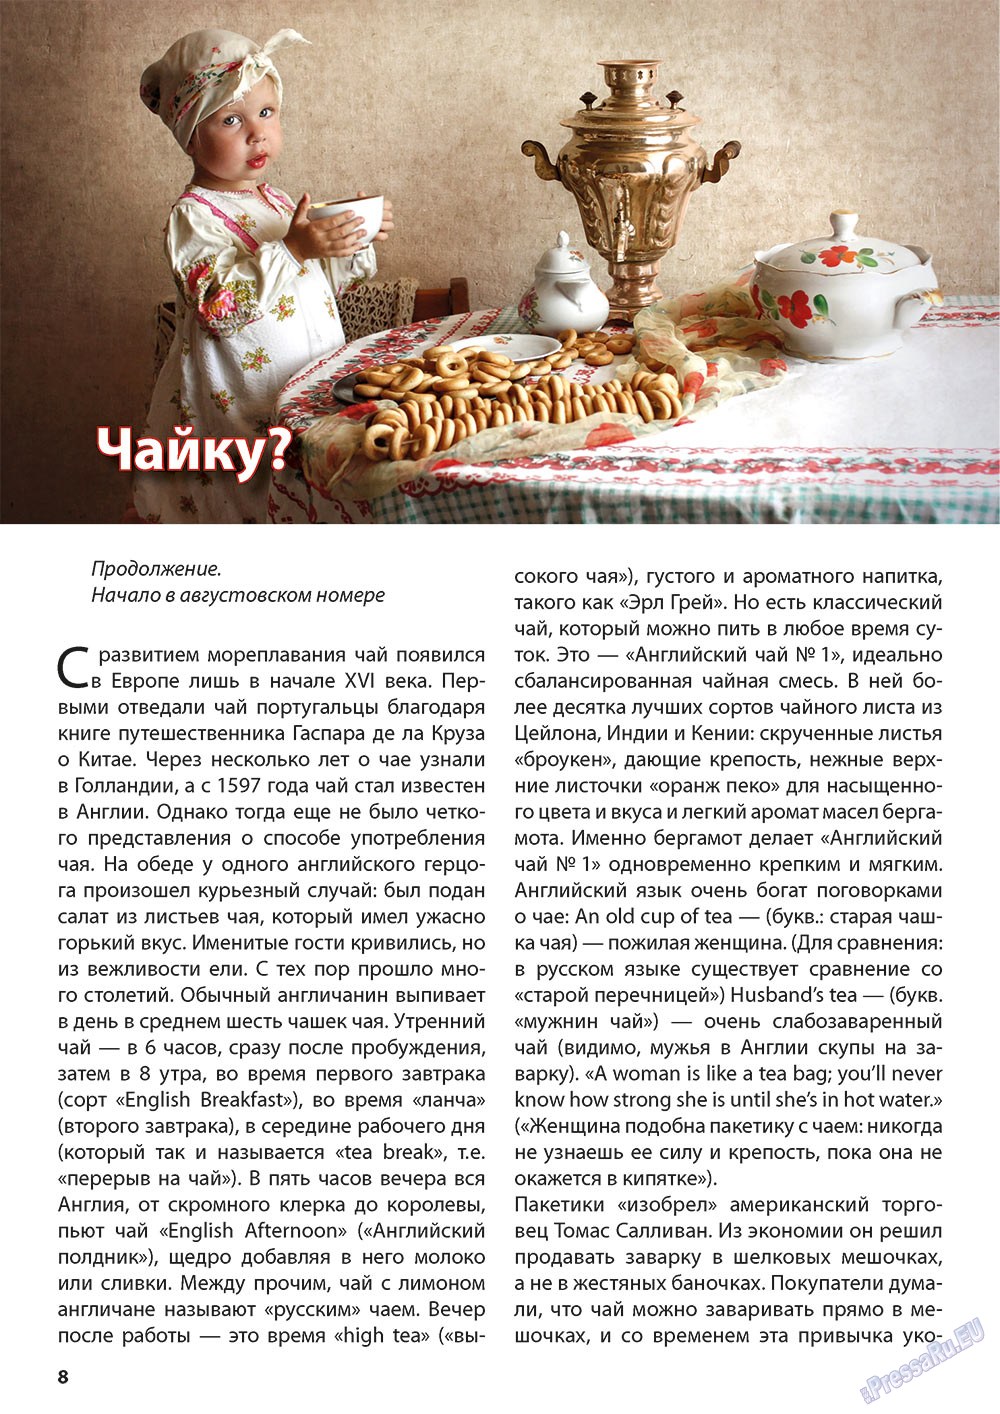 Wadim, журнал. 2012 №9 стр.8